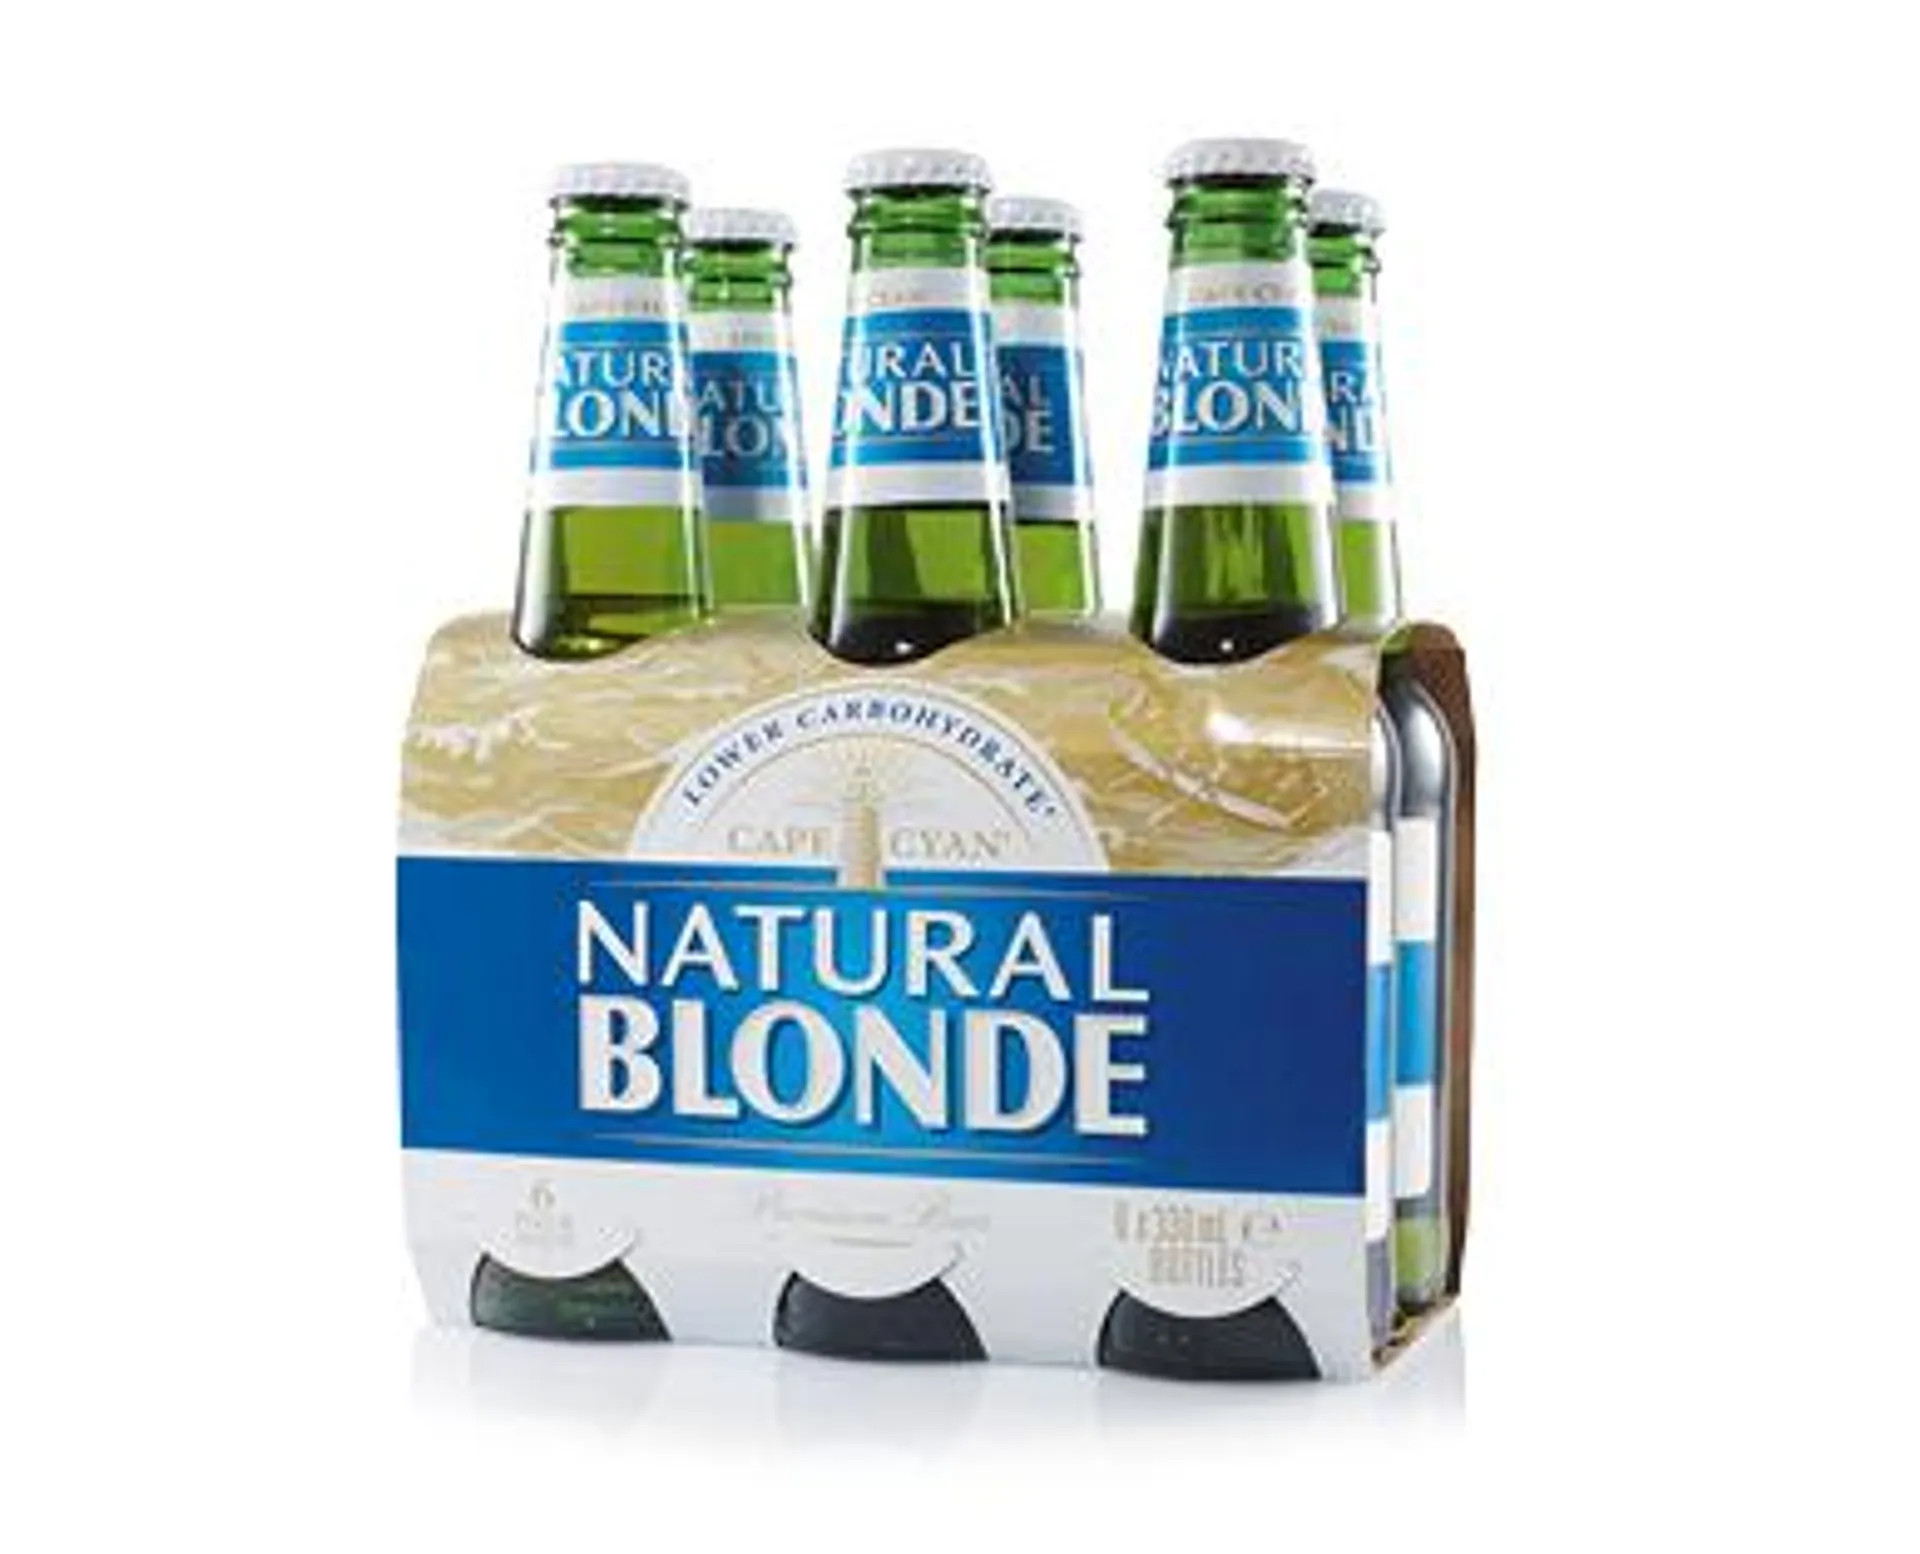 Cape Cyan Natural Blonde Beer 6 x 330ml